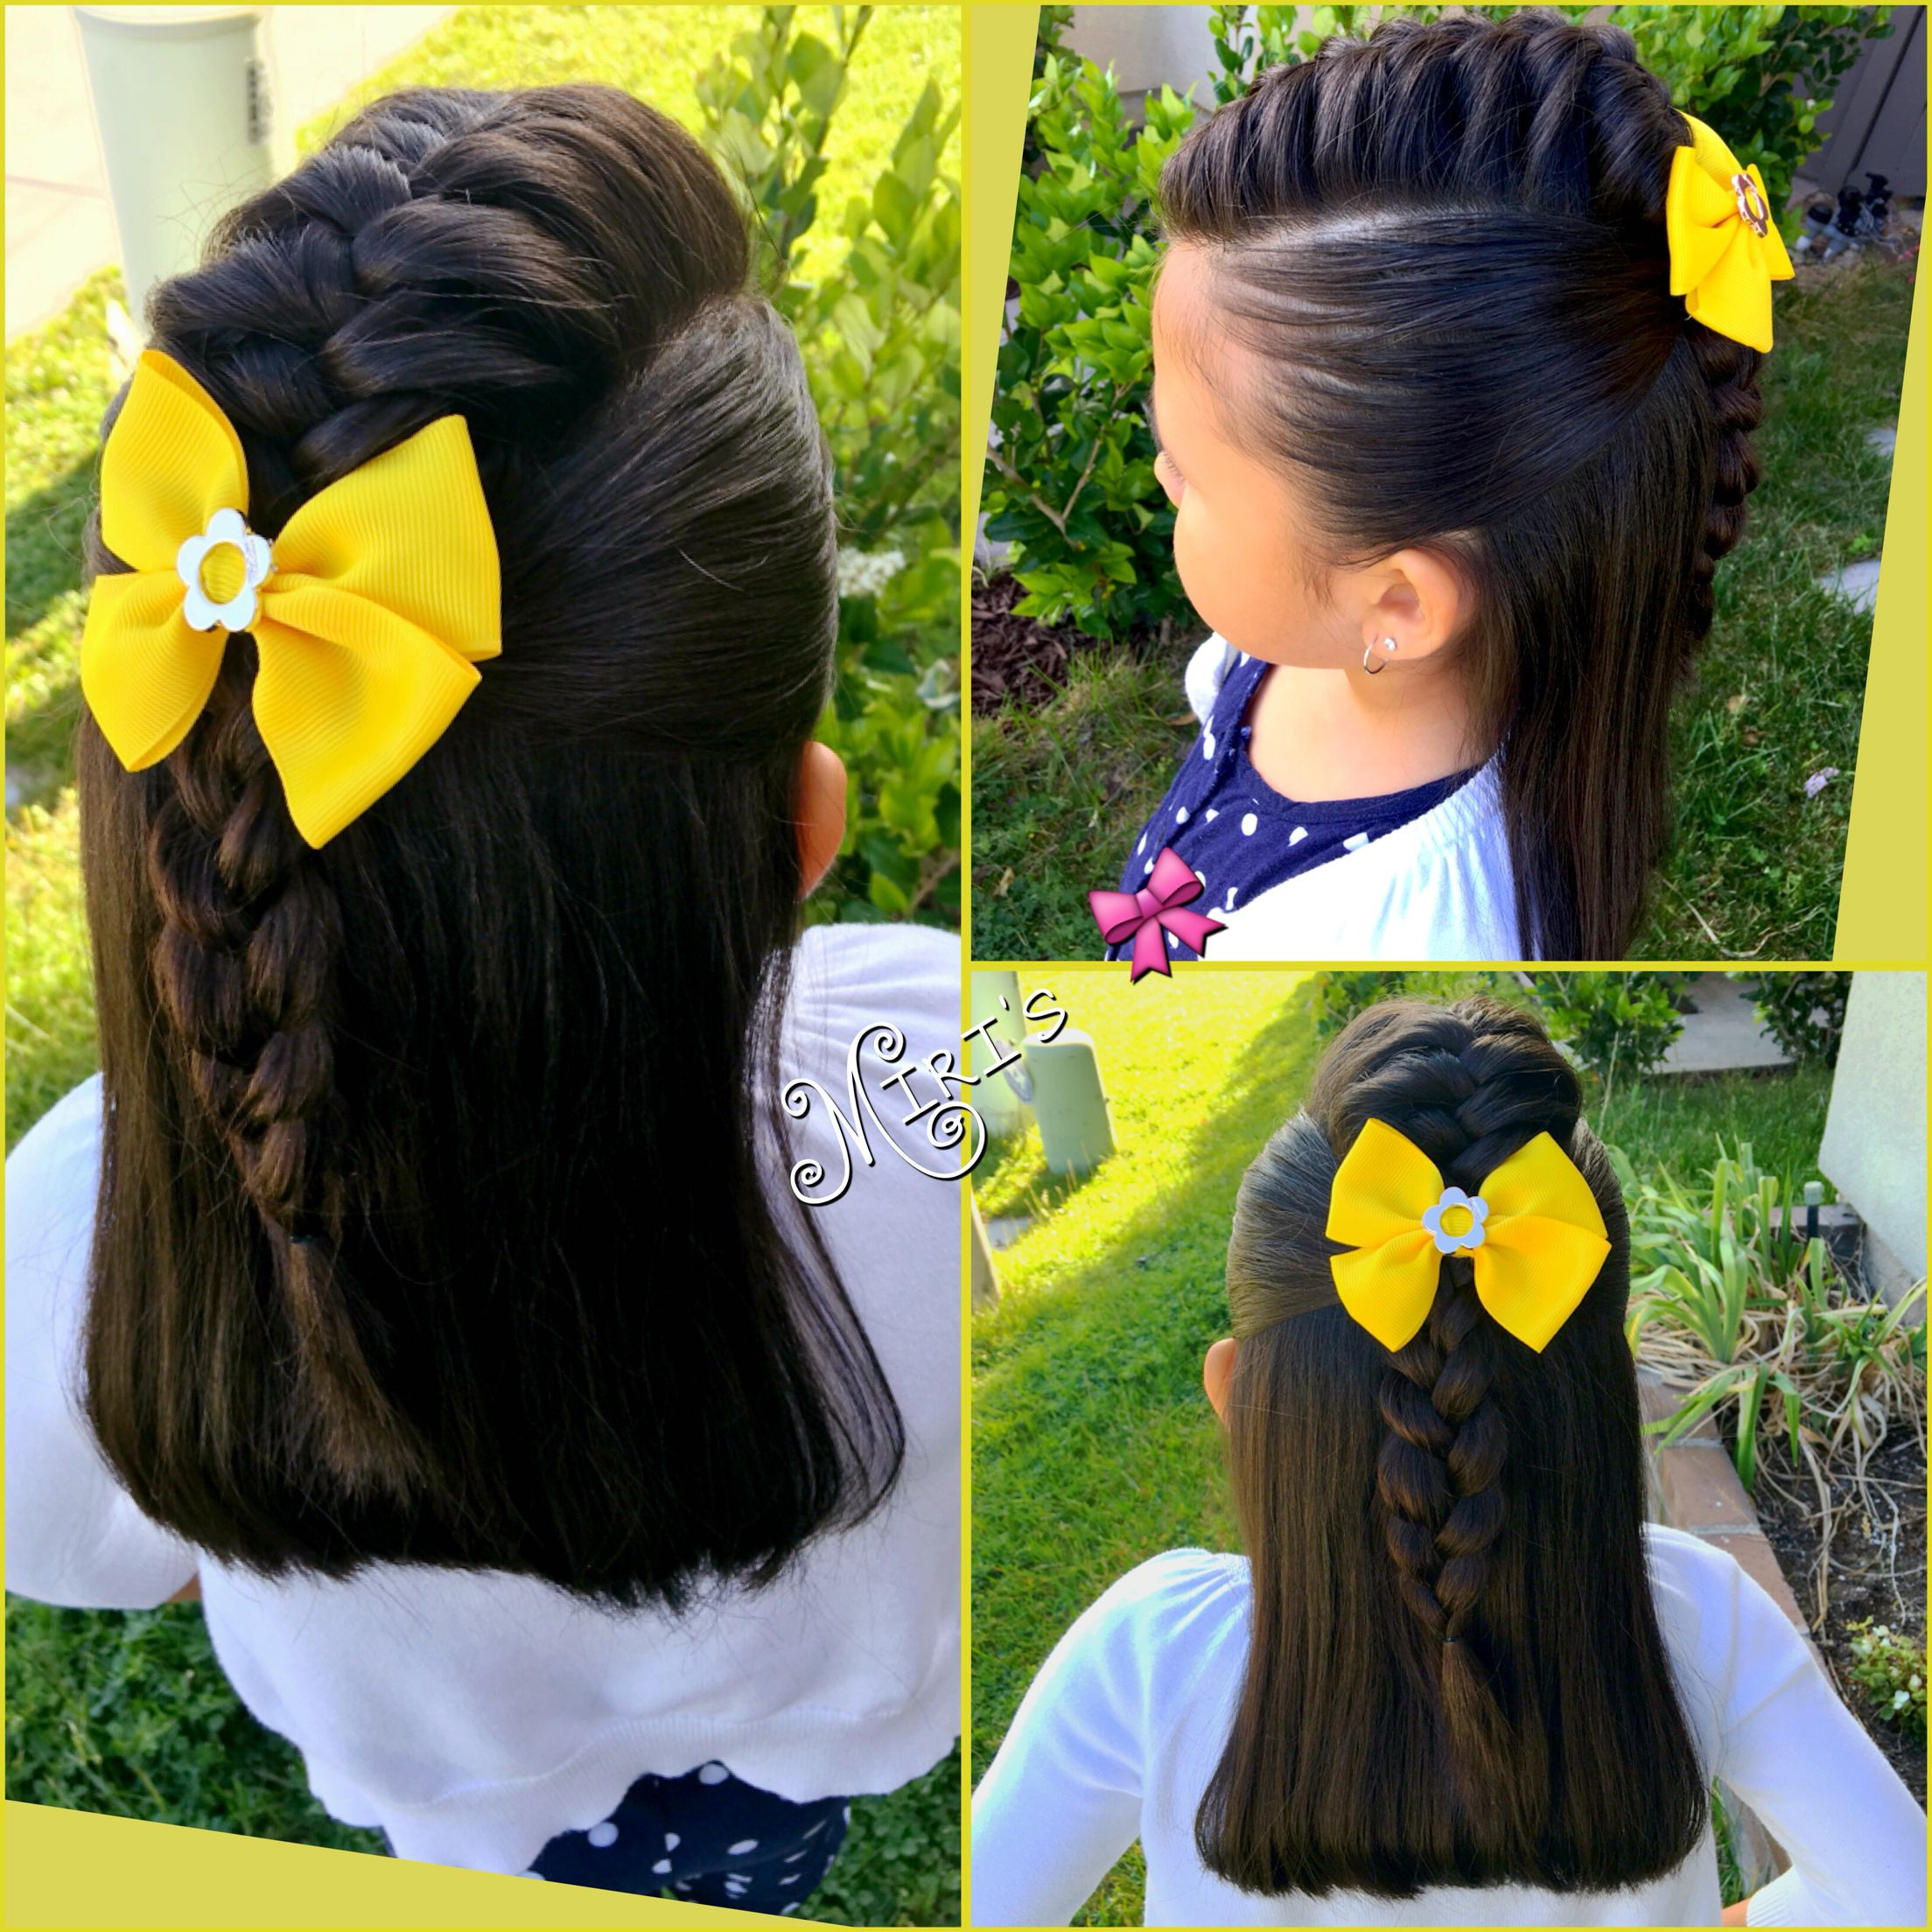 Girly Hairstyles For Little Girls
 Mohawk hair style for little girls